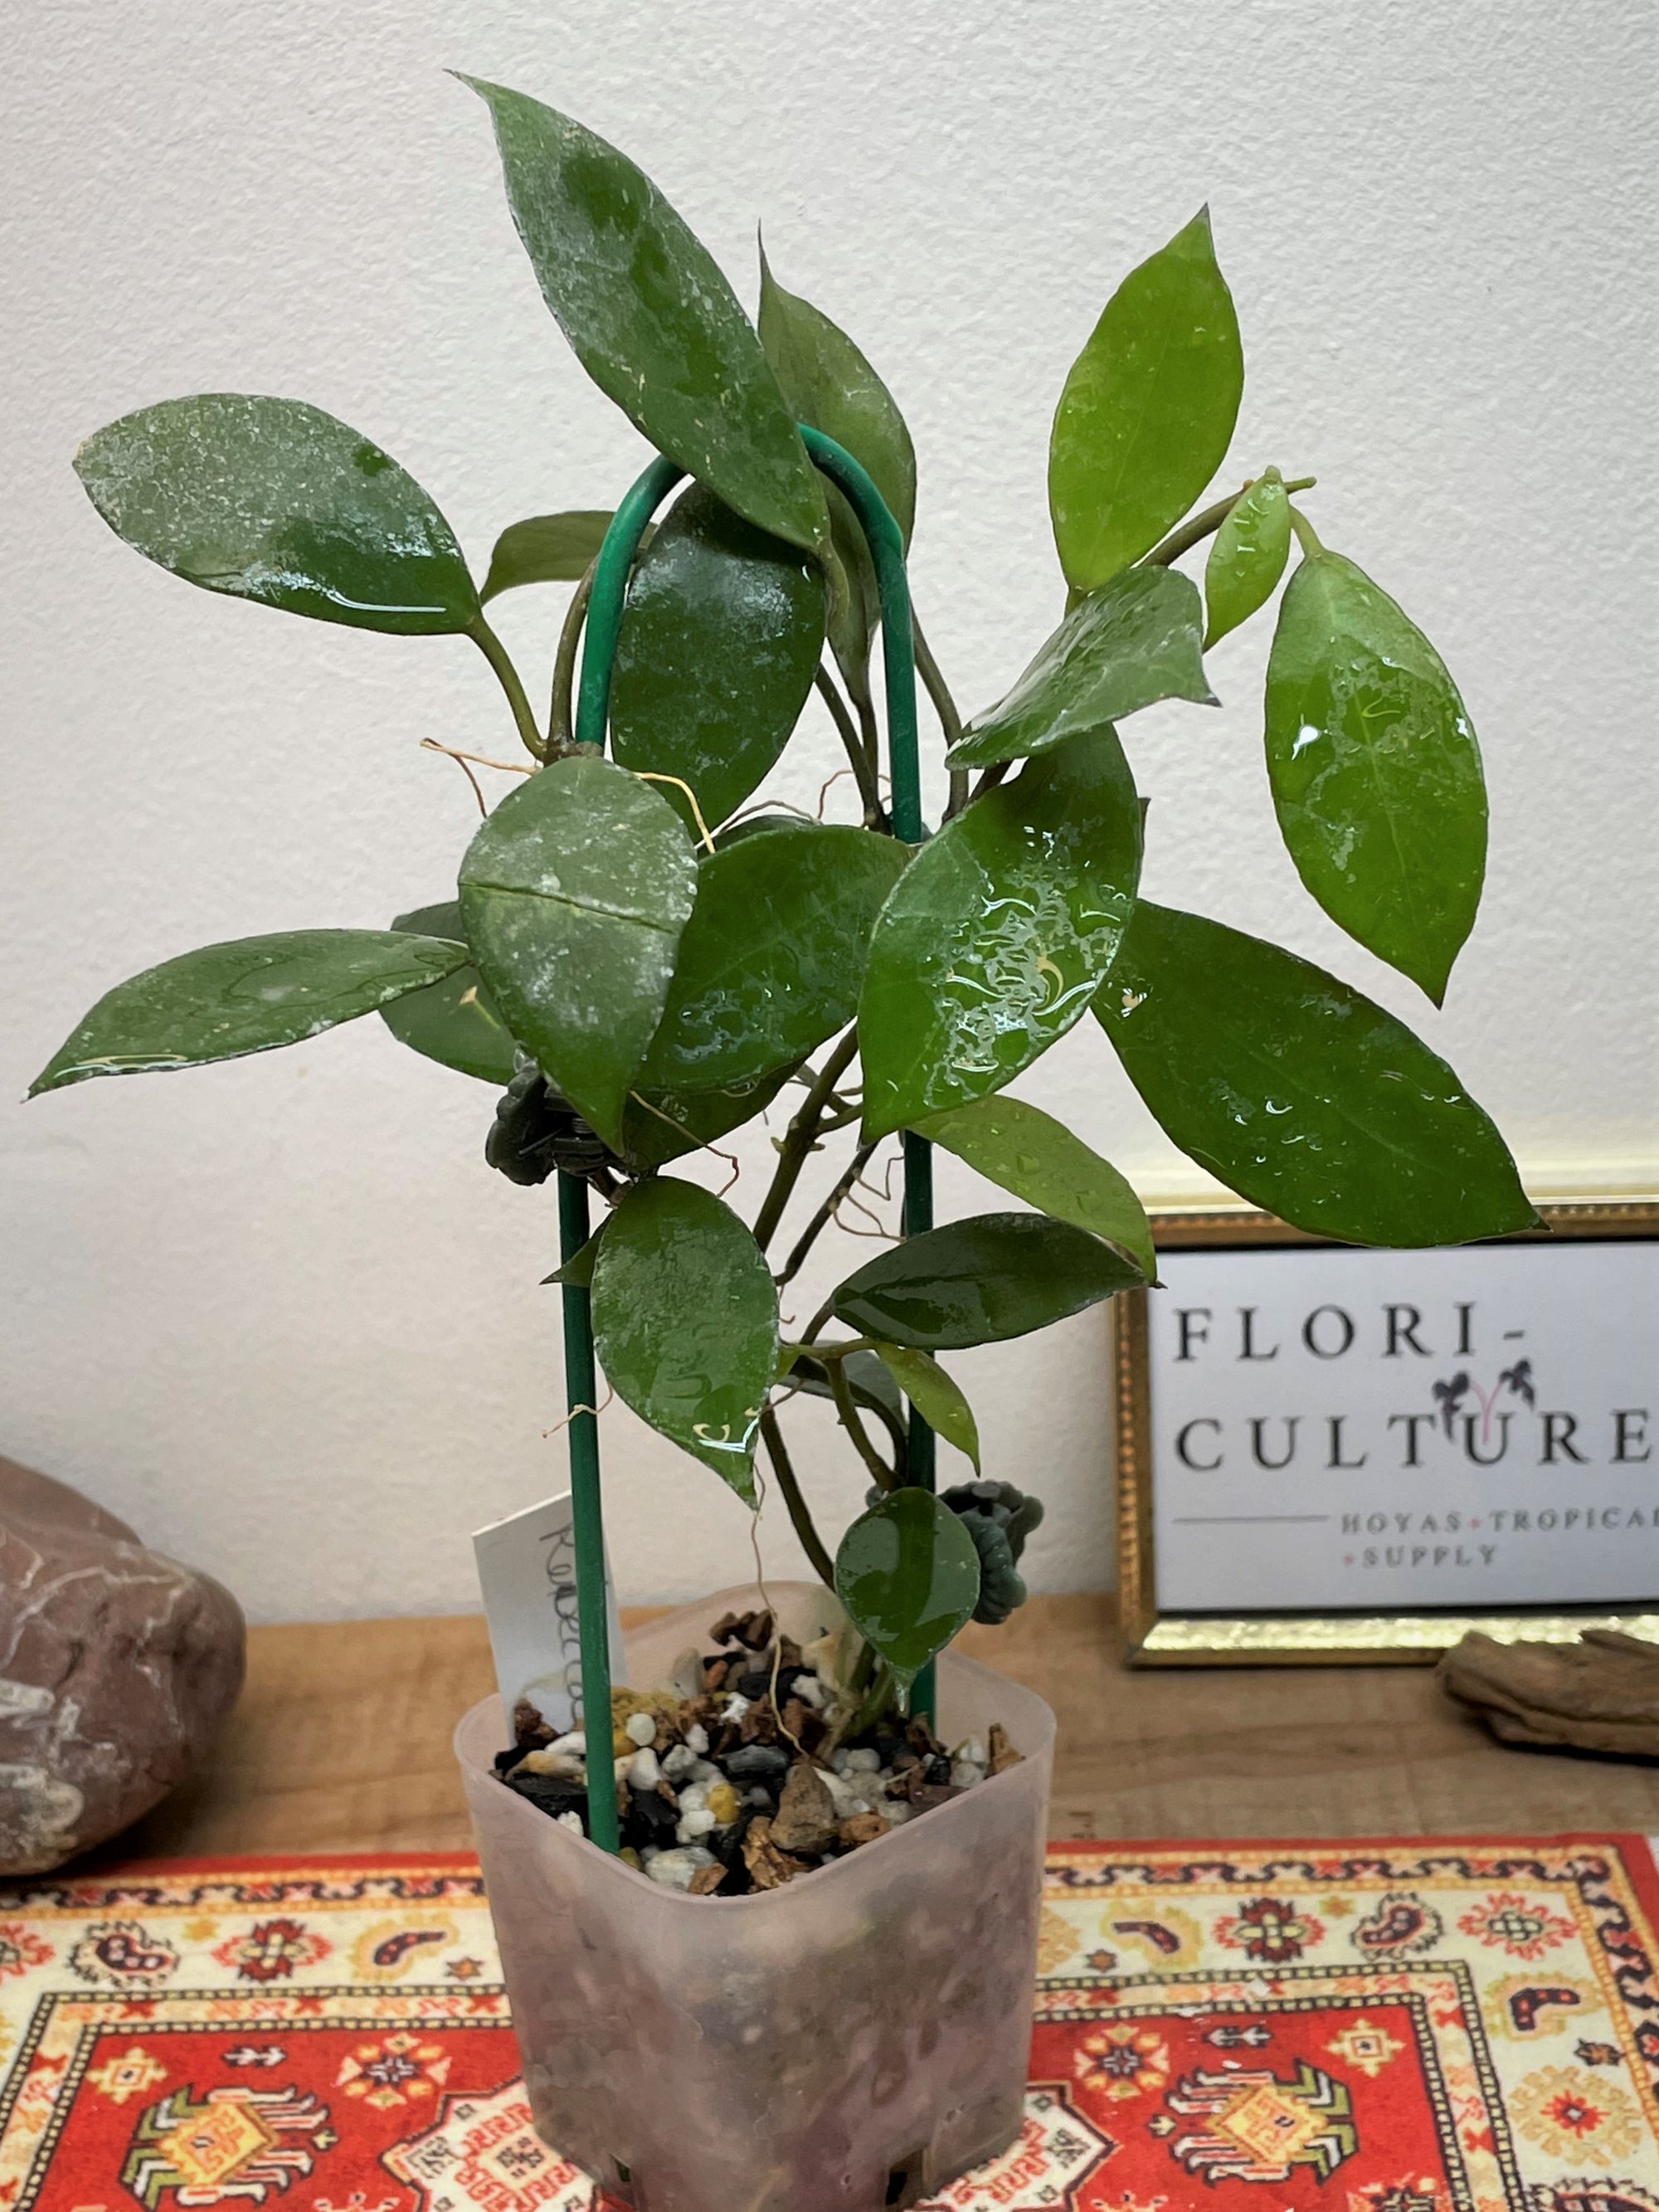 Hoya cv. Jennifer (incrassata X finlaysonii) - Flori-Culture Tropical  Nursery + Hoya + Supply